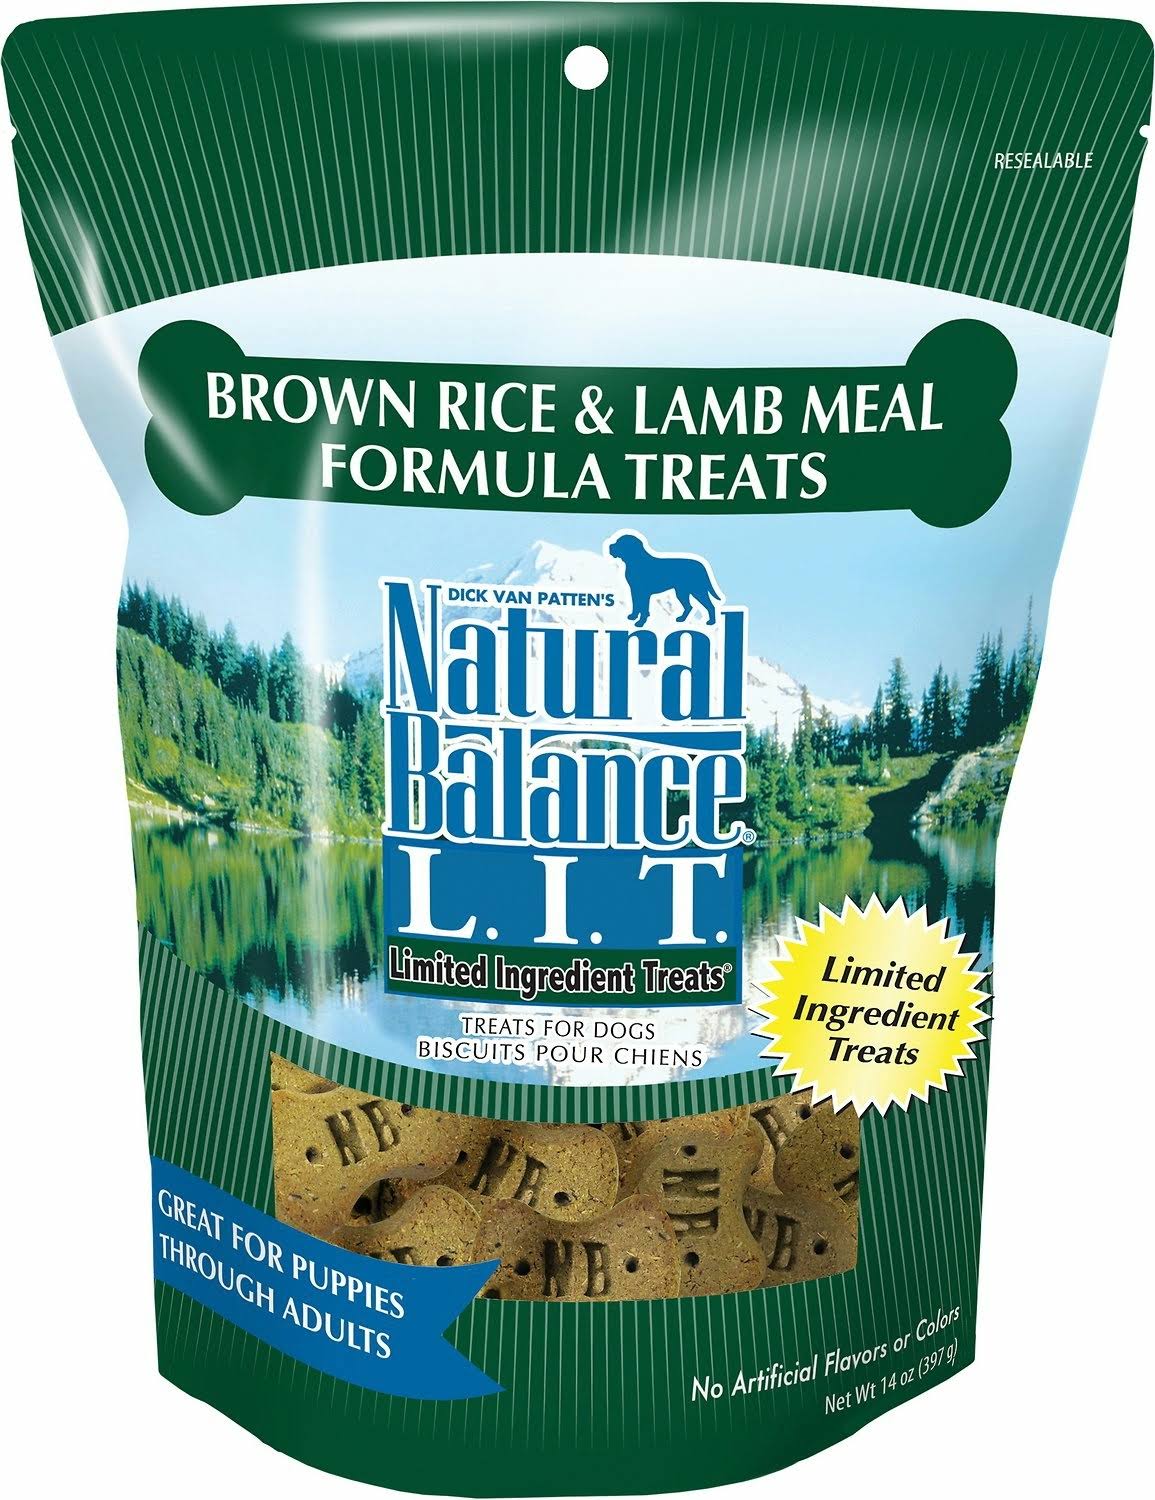 Natural Balance Limited Ingredient Dog Treats - Brown Rice and Lamb Meal Formula, Dry, 14oz